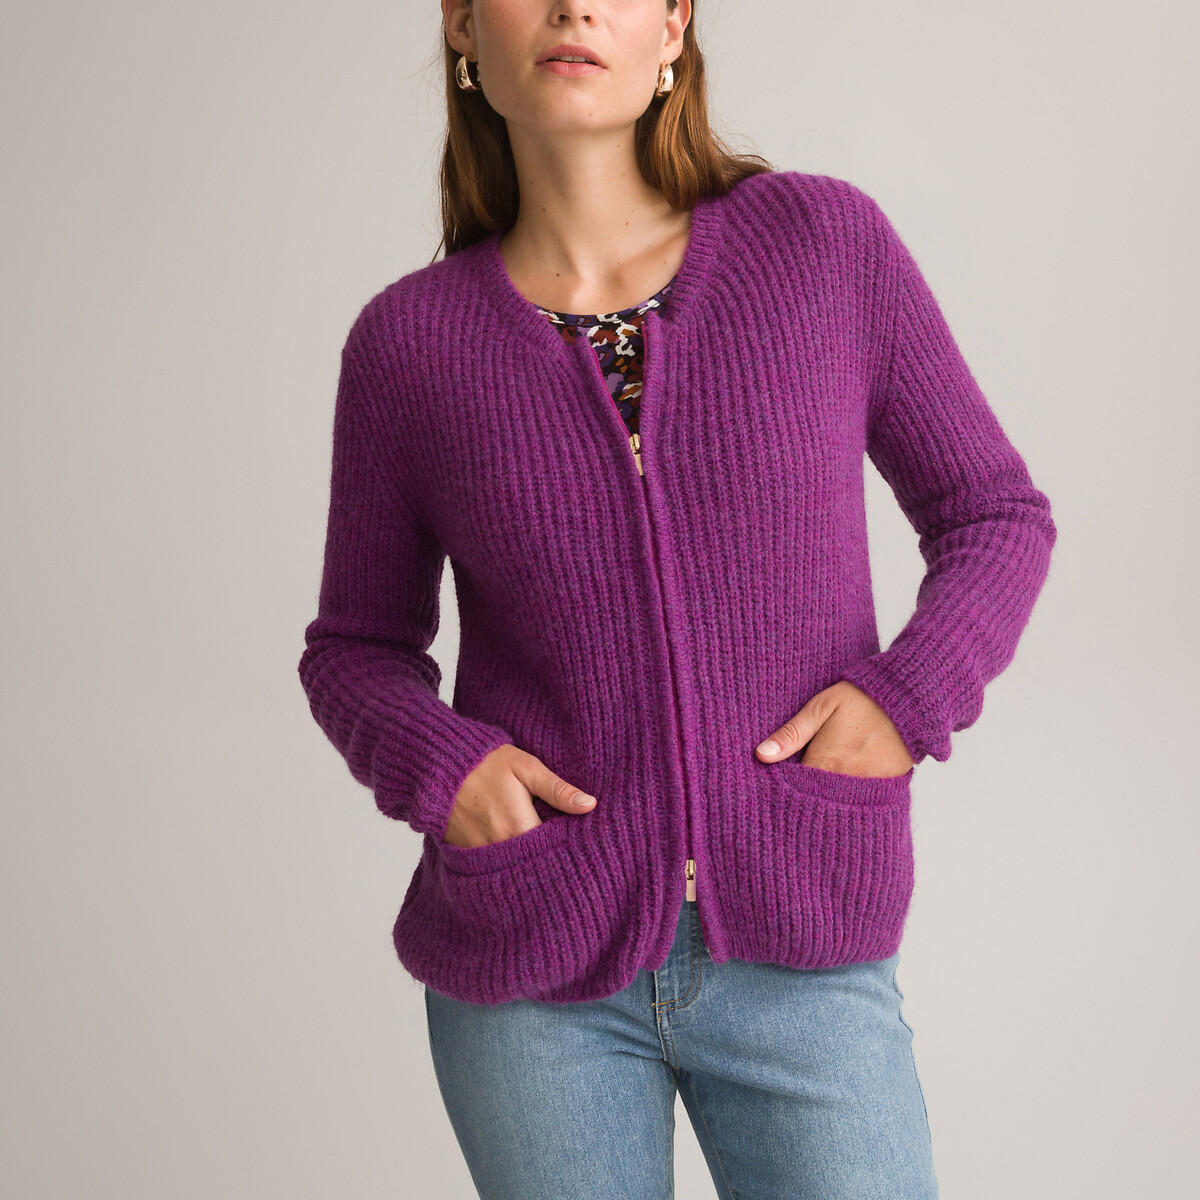 Two-way zip cardigan in chunky knit, dark purple, Anne Weyburn